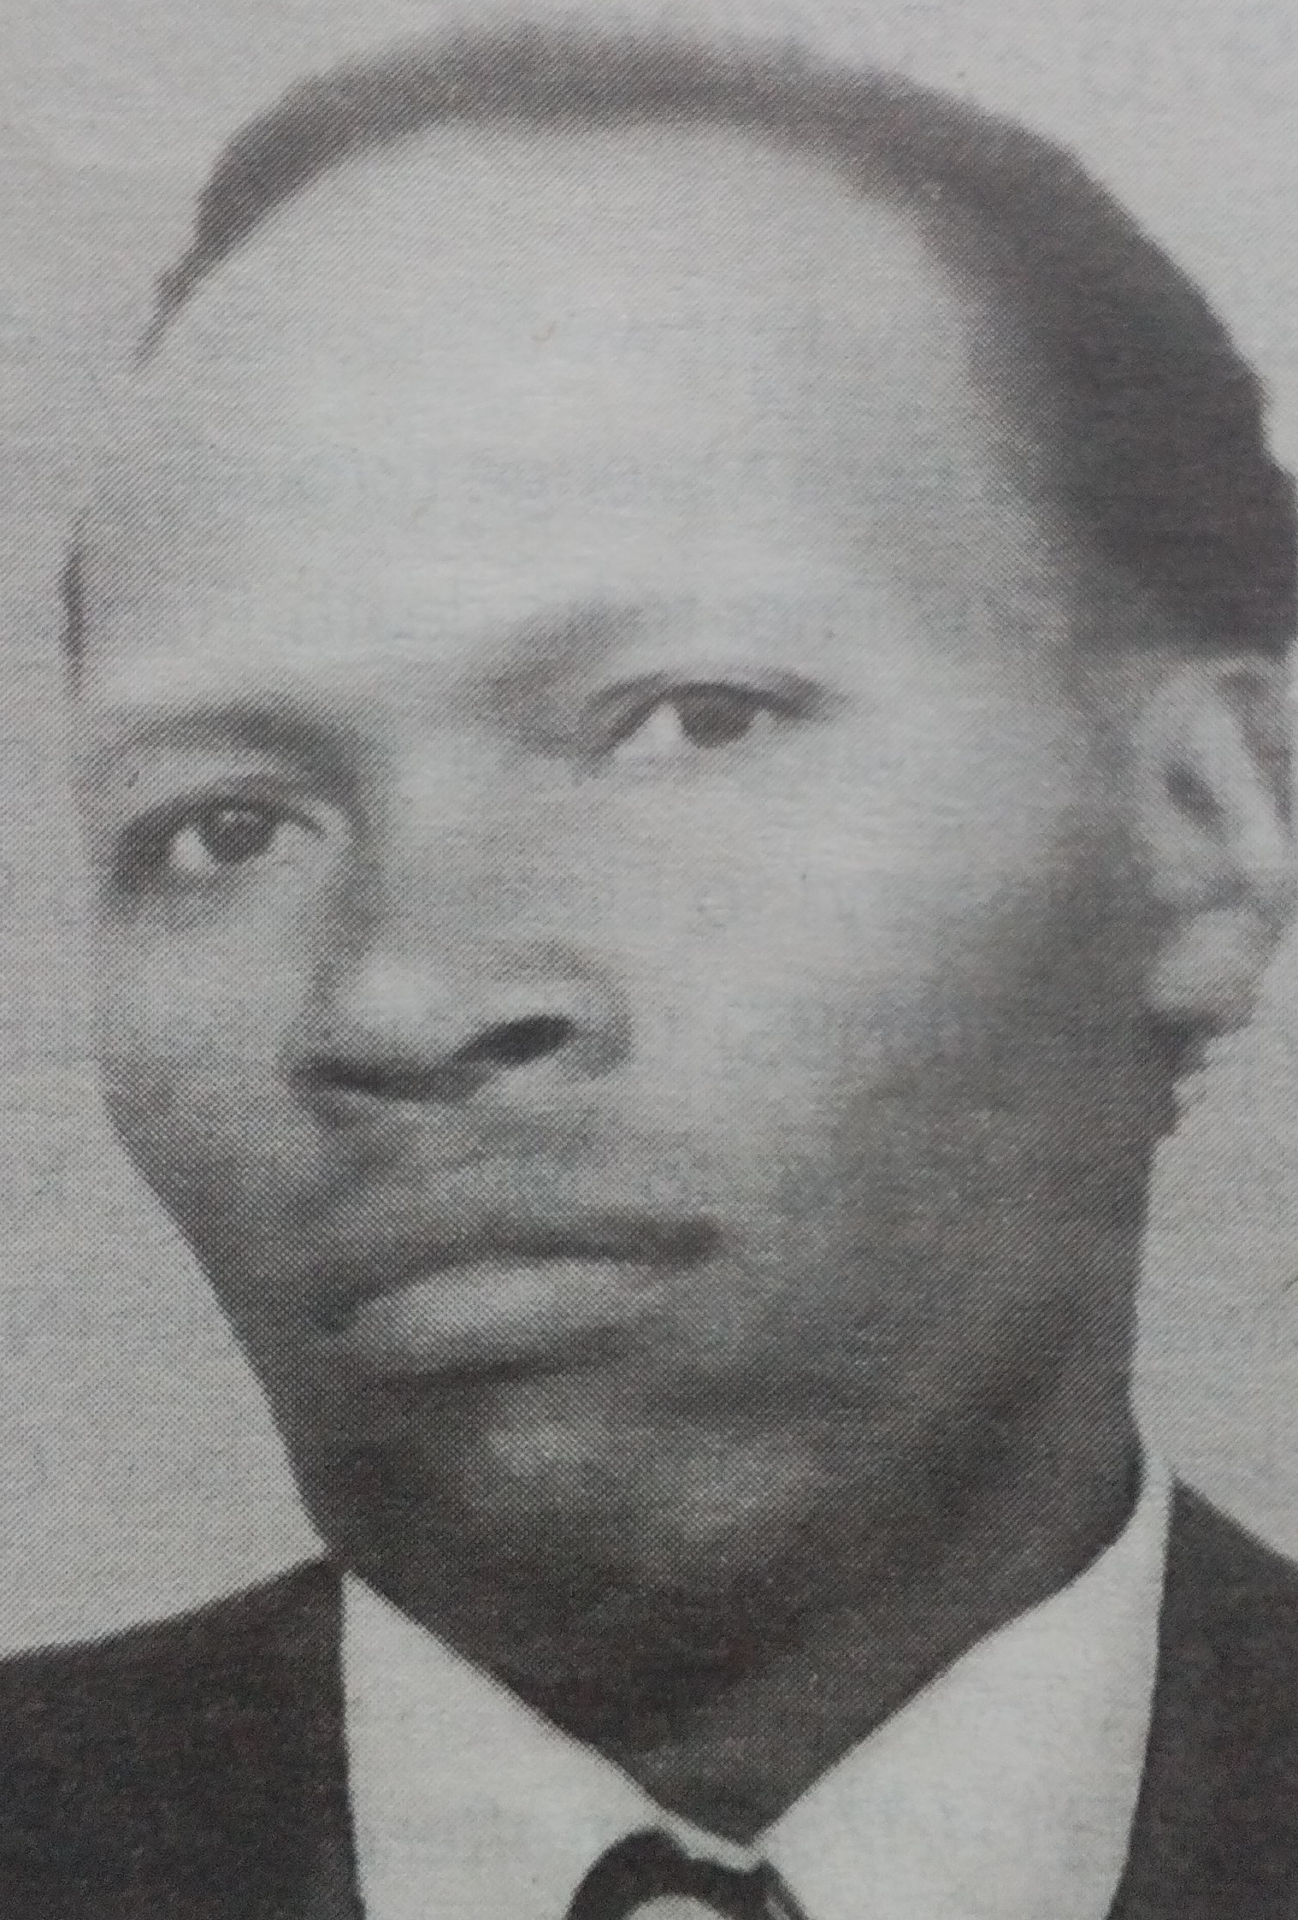 Obituary Image of Willie Mbote Njuguna